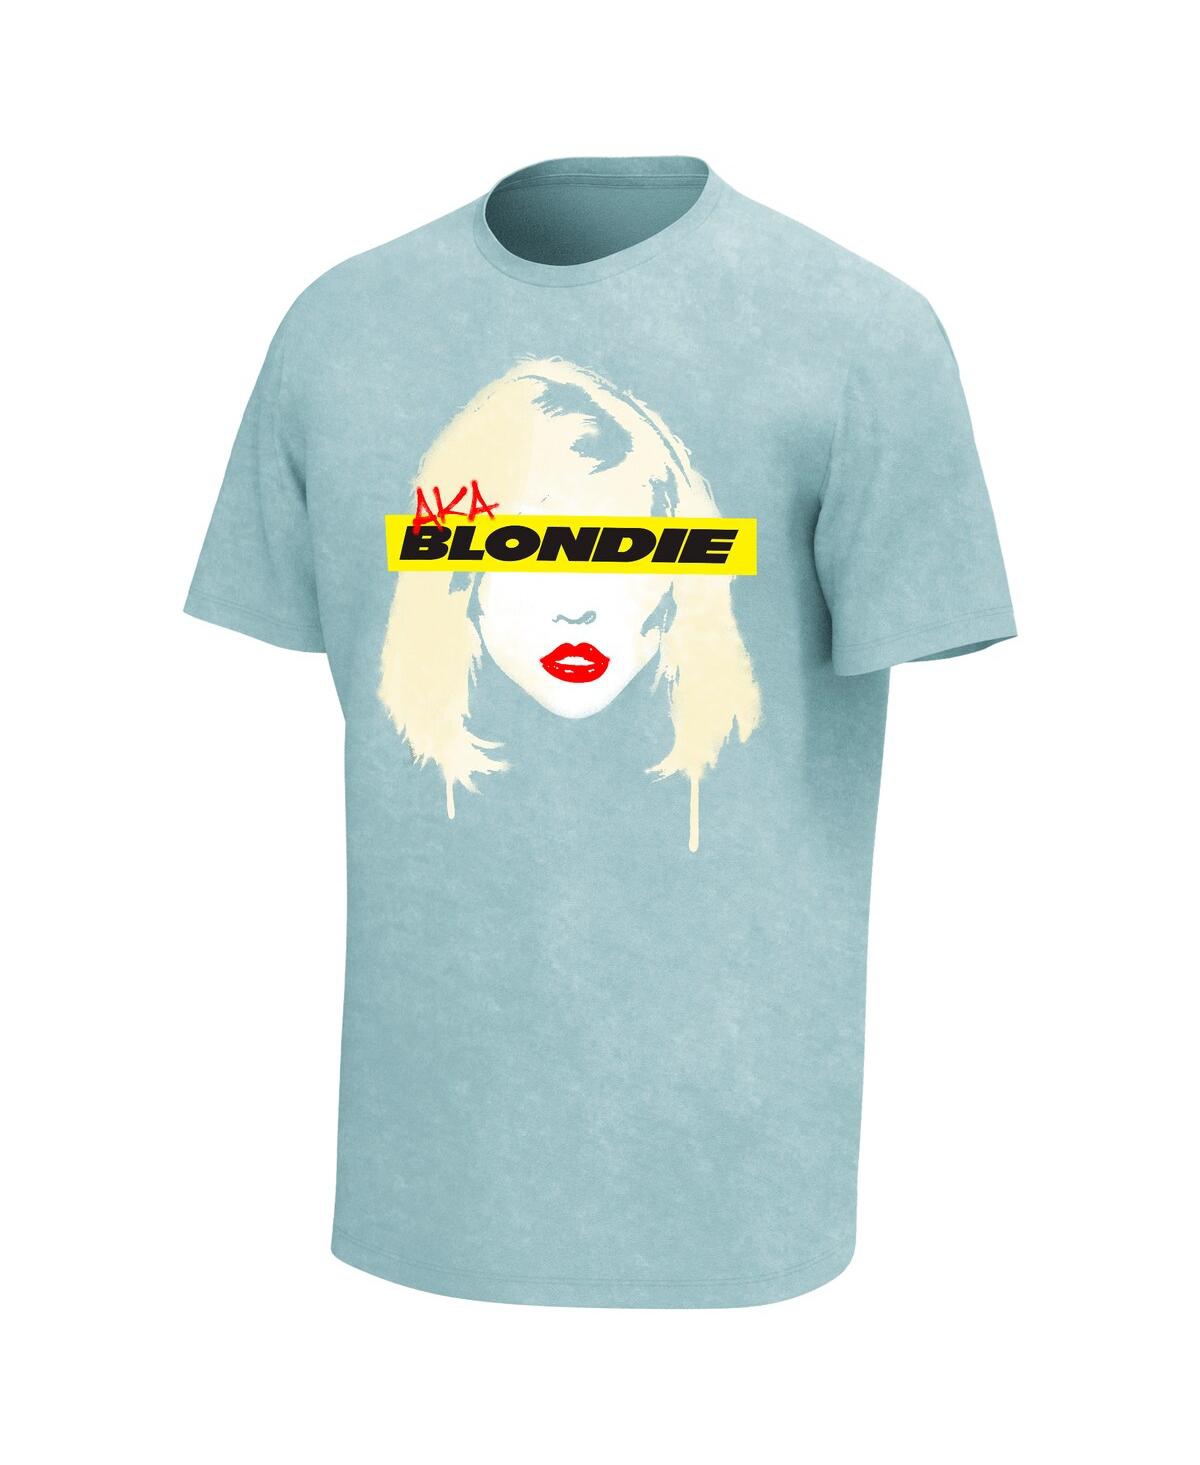 Shop Philcos Men's Light Green Distressed Blondie Spray Washed Graphic T-shirt